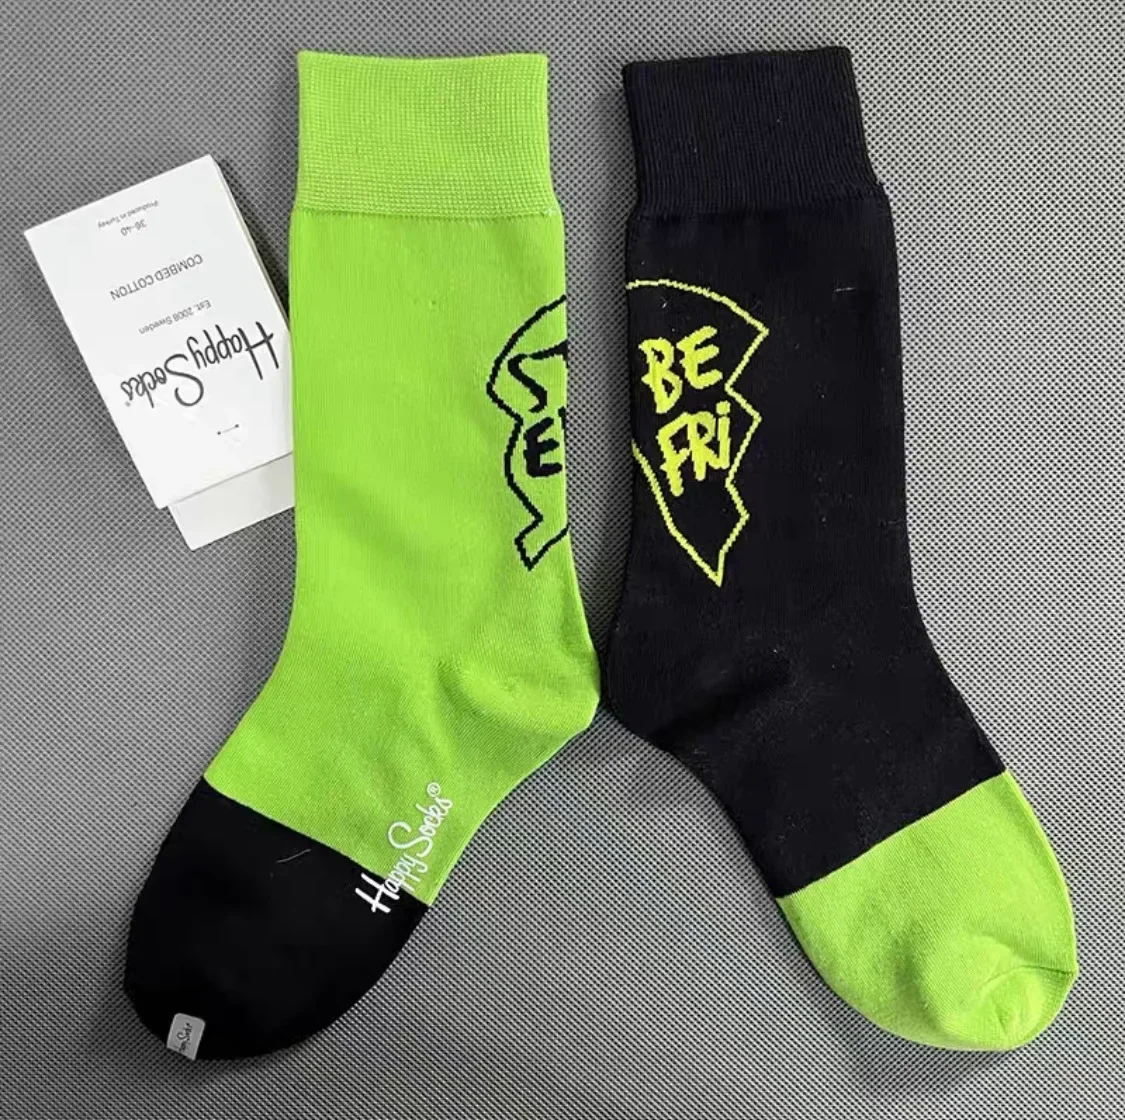 Happy Socks Women Crew Socks Cotton Novelty Gift One Size Fit Most